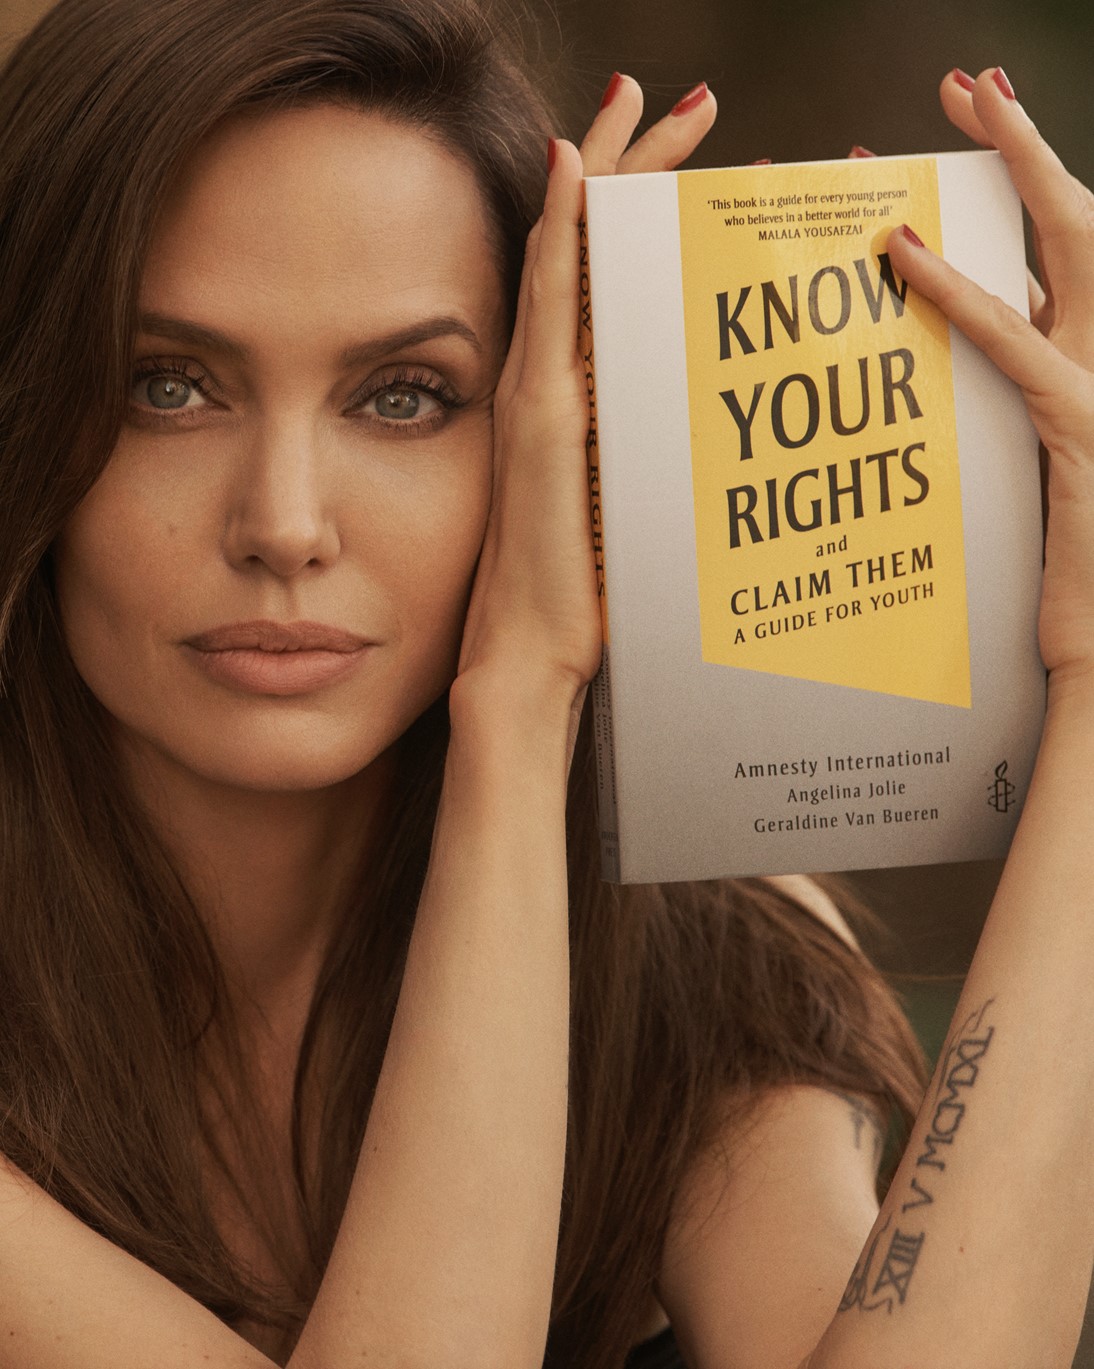 The Angelina Jolie Look Book